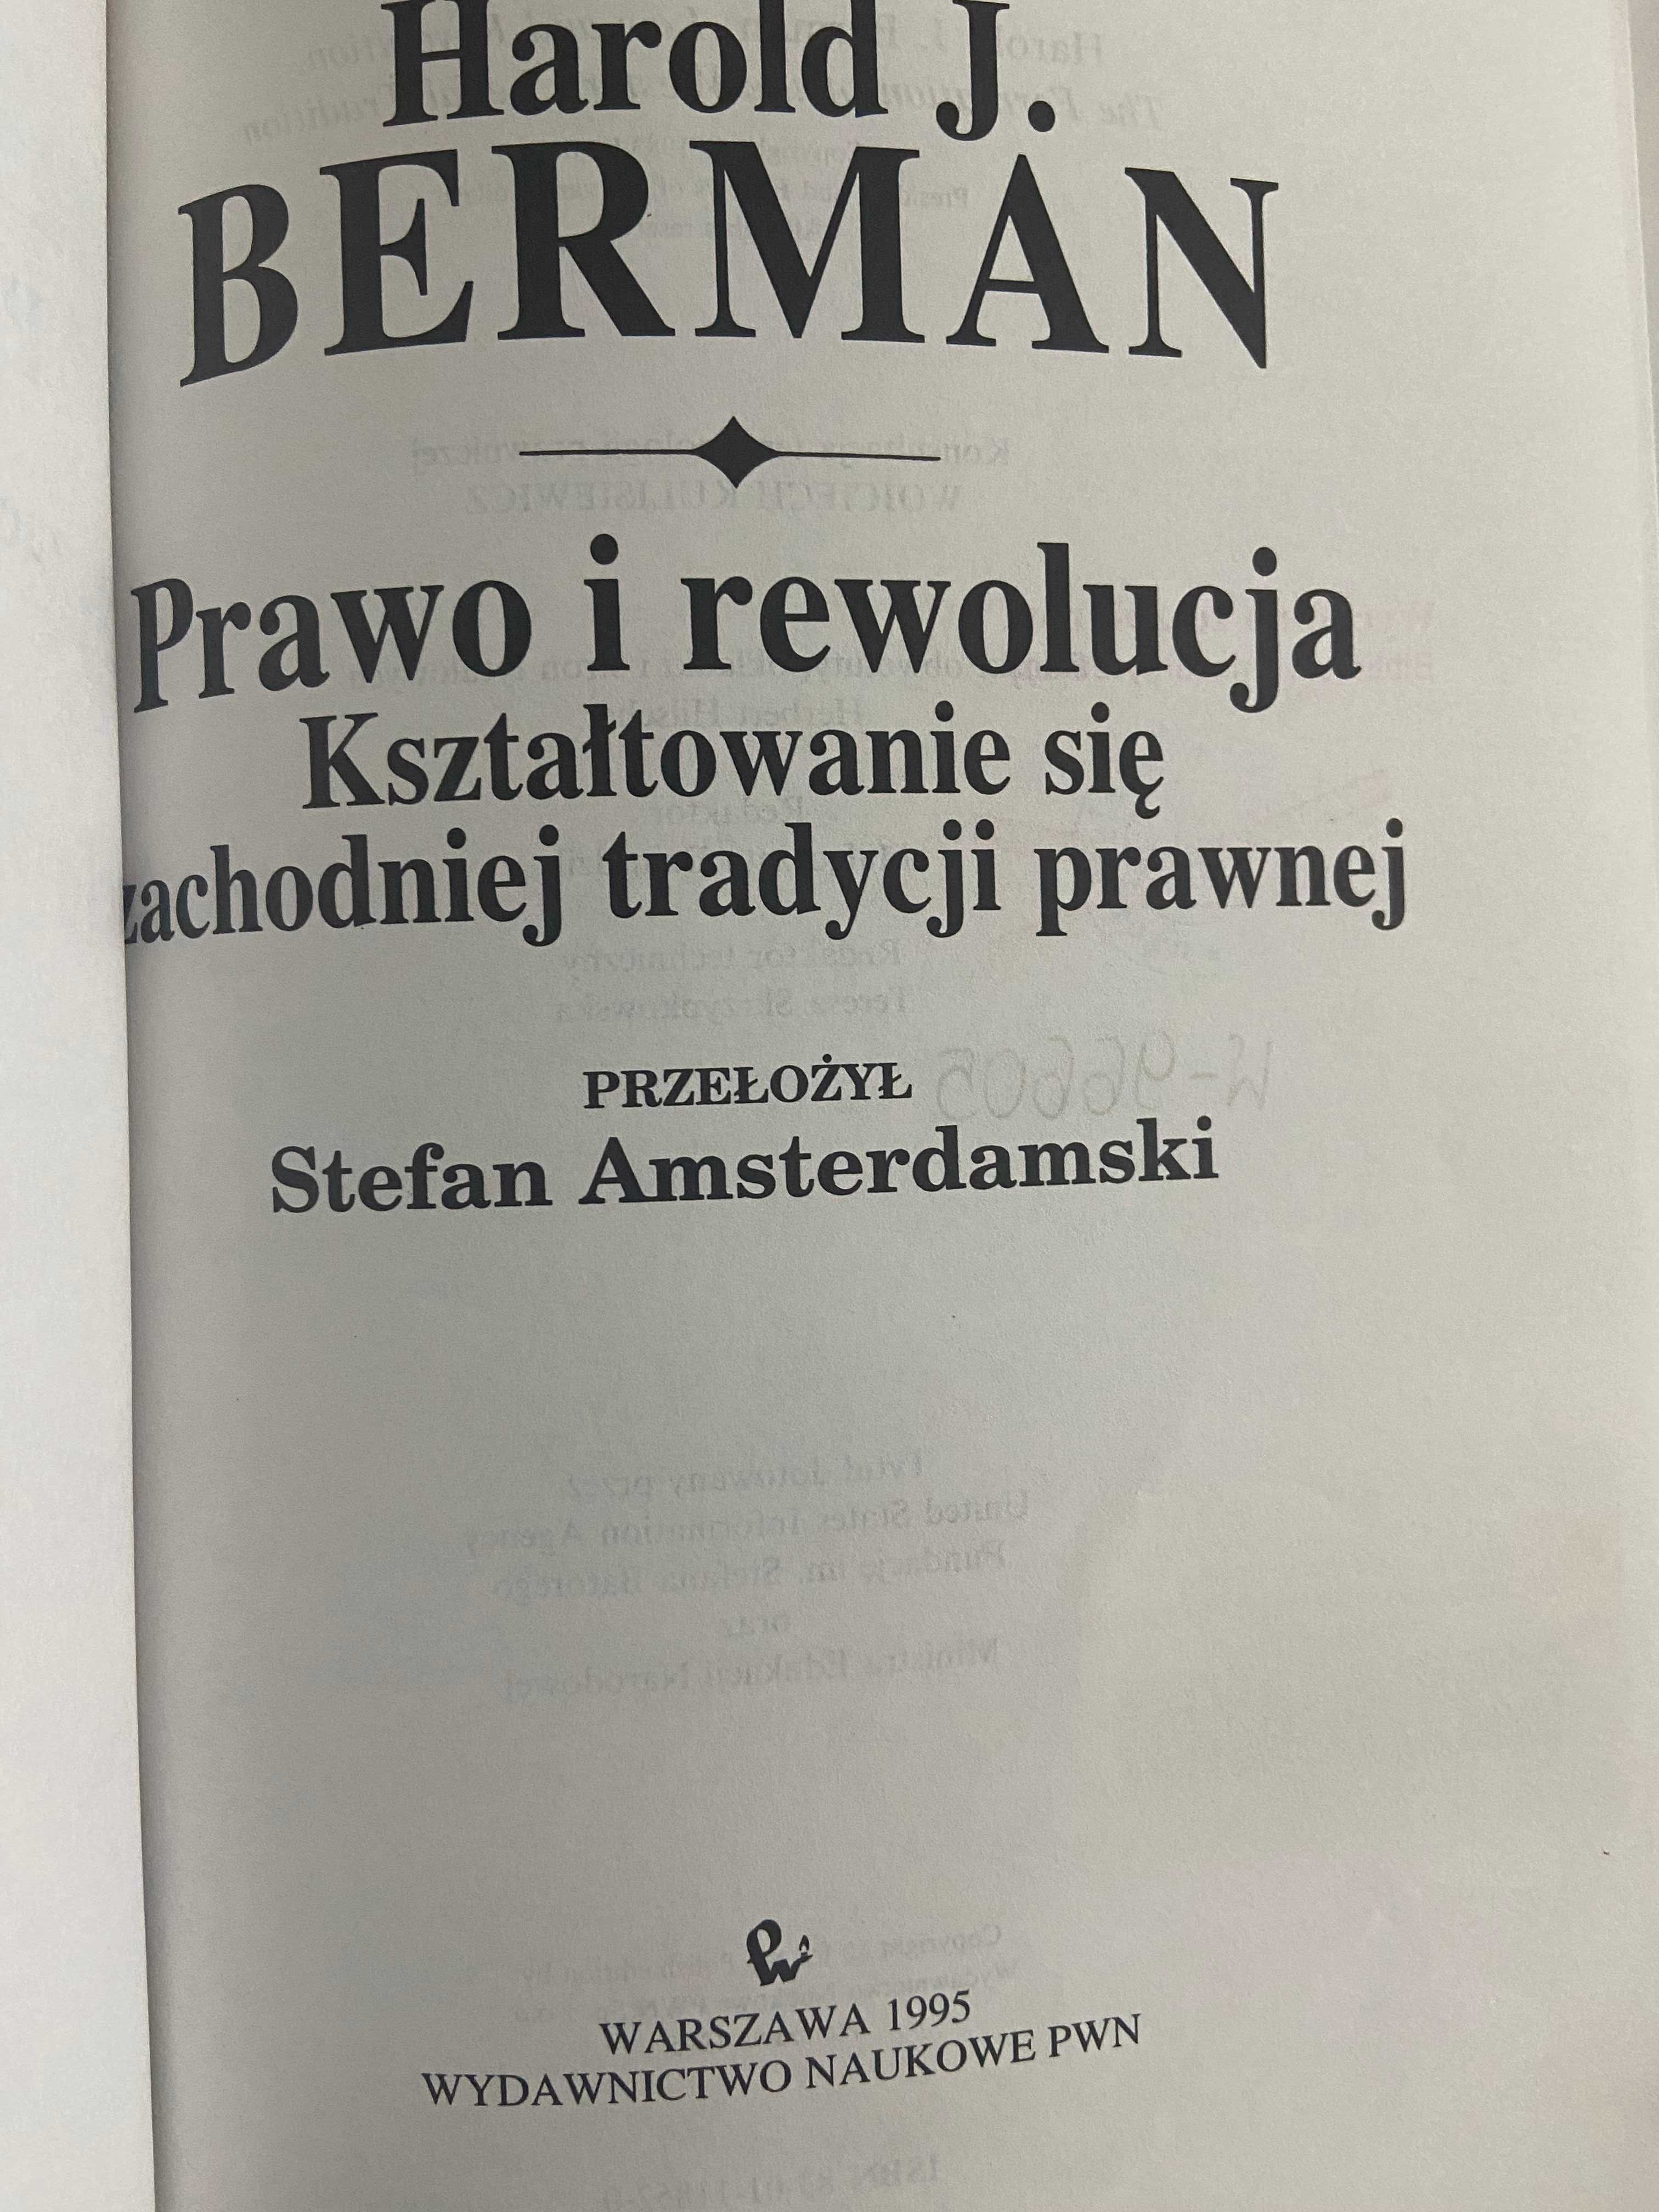 Harold J. Berman, Prawo i rewolucja